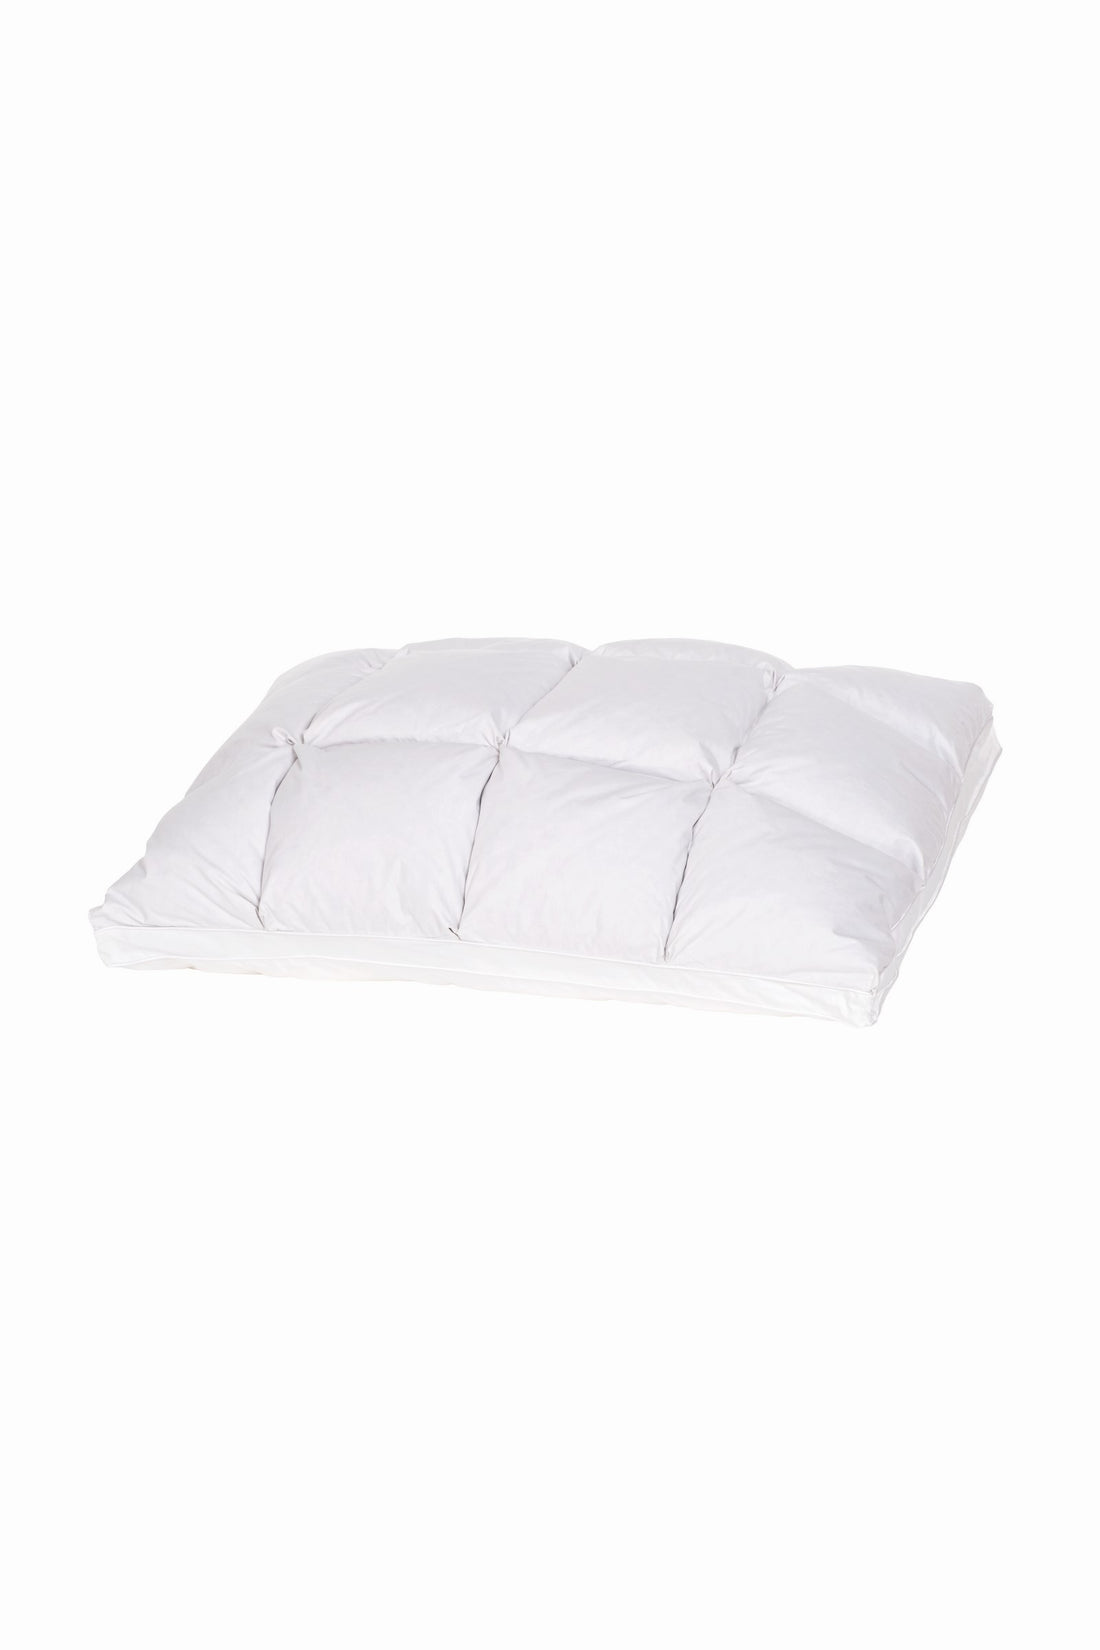 Cotton Box Elegance Goose Feather Pillow 50x70